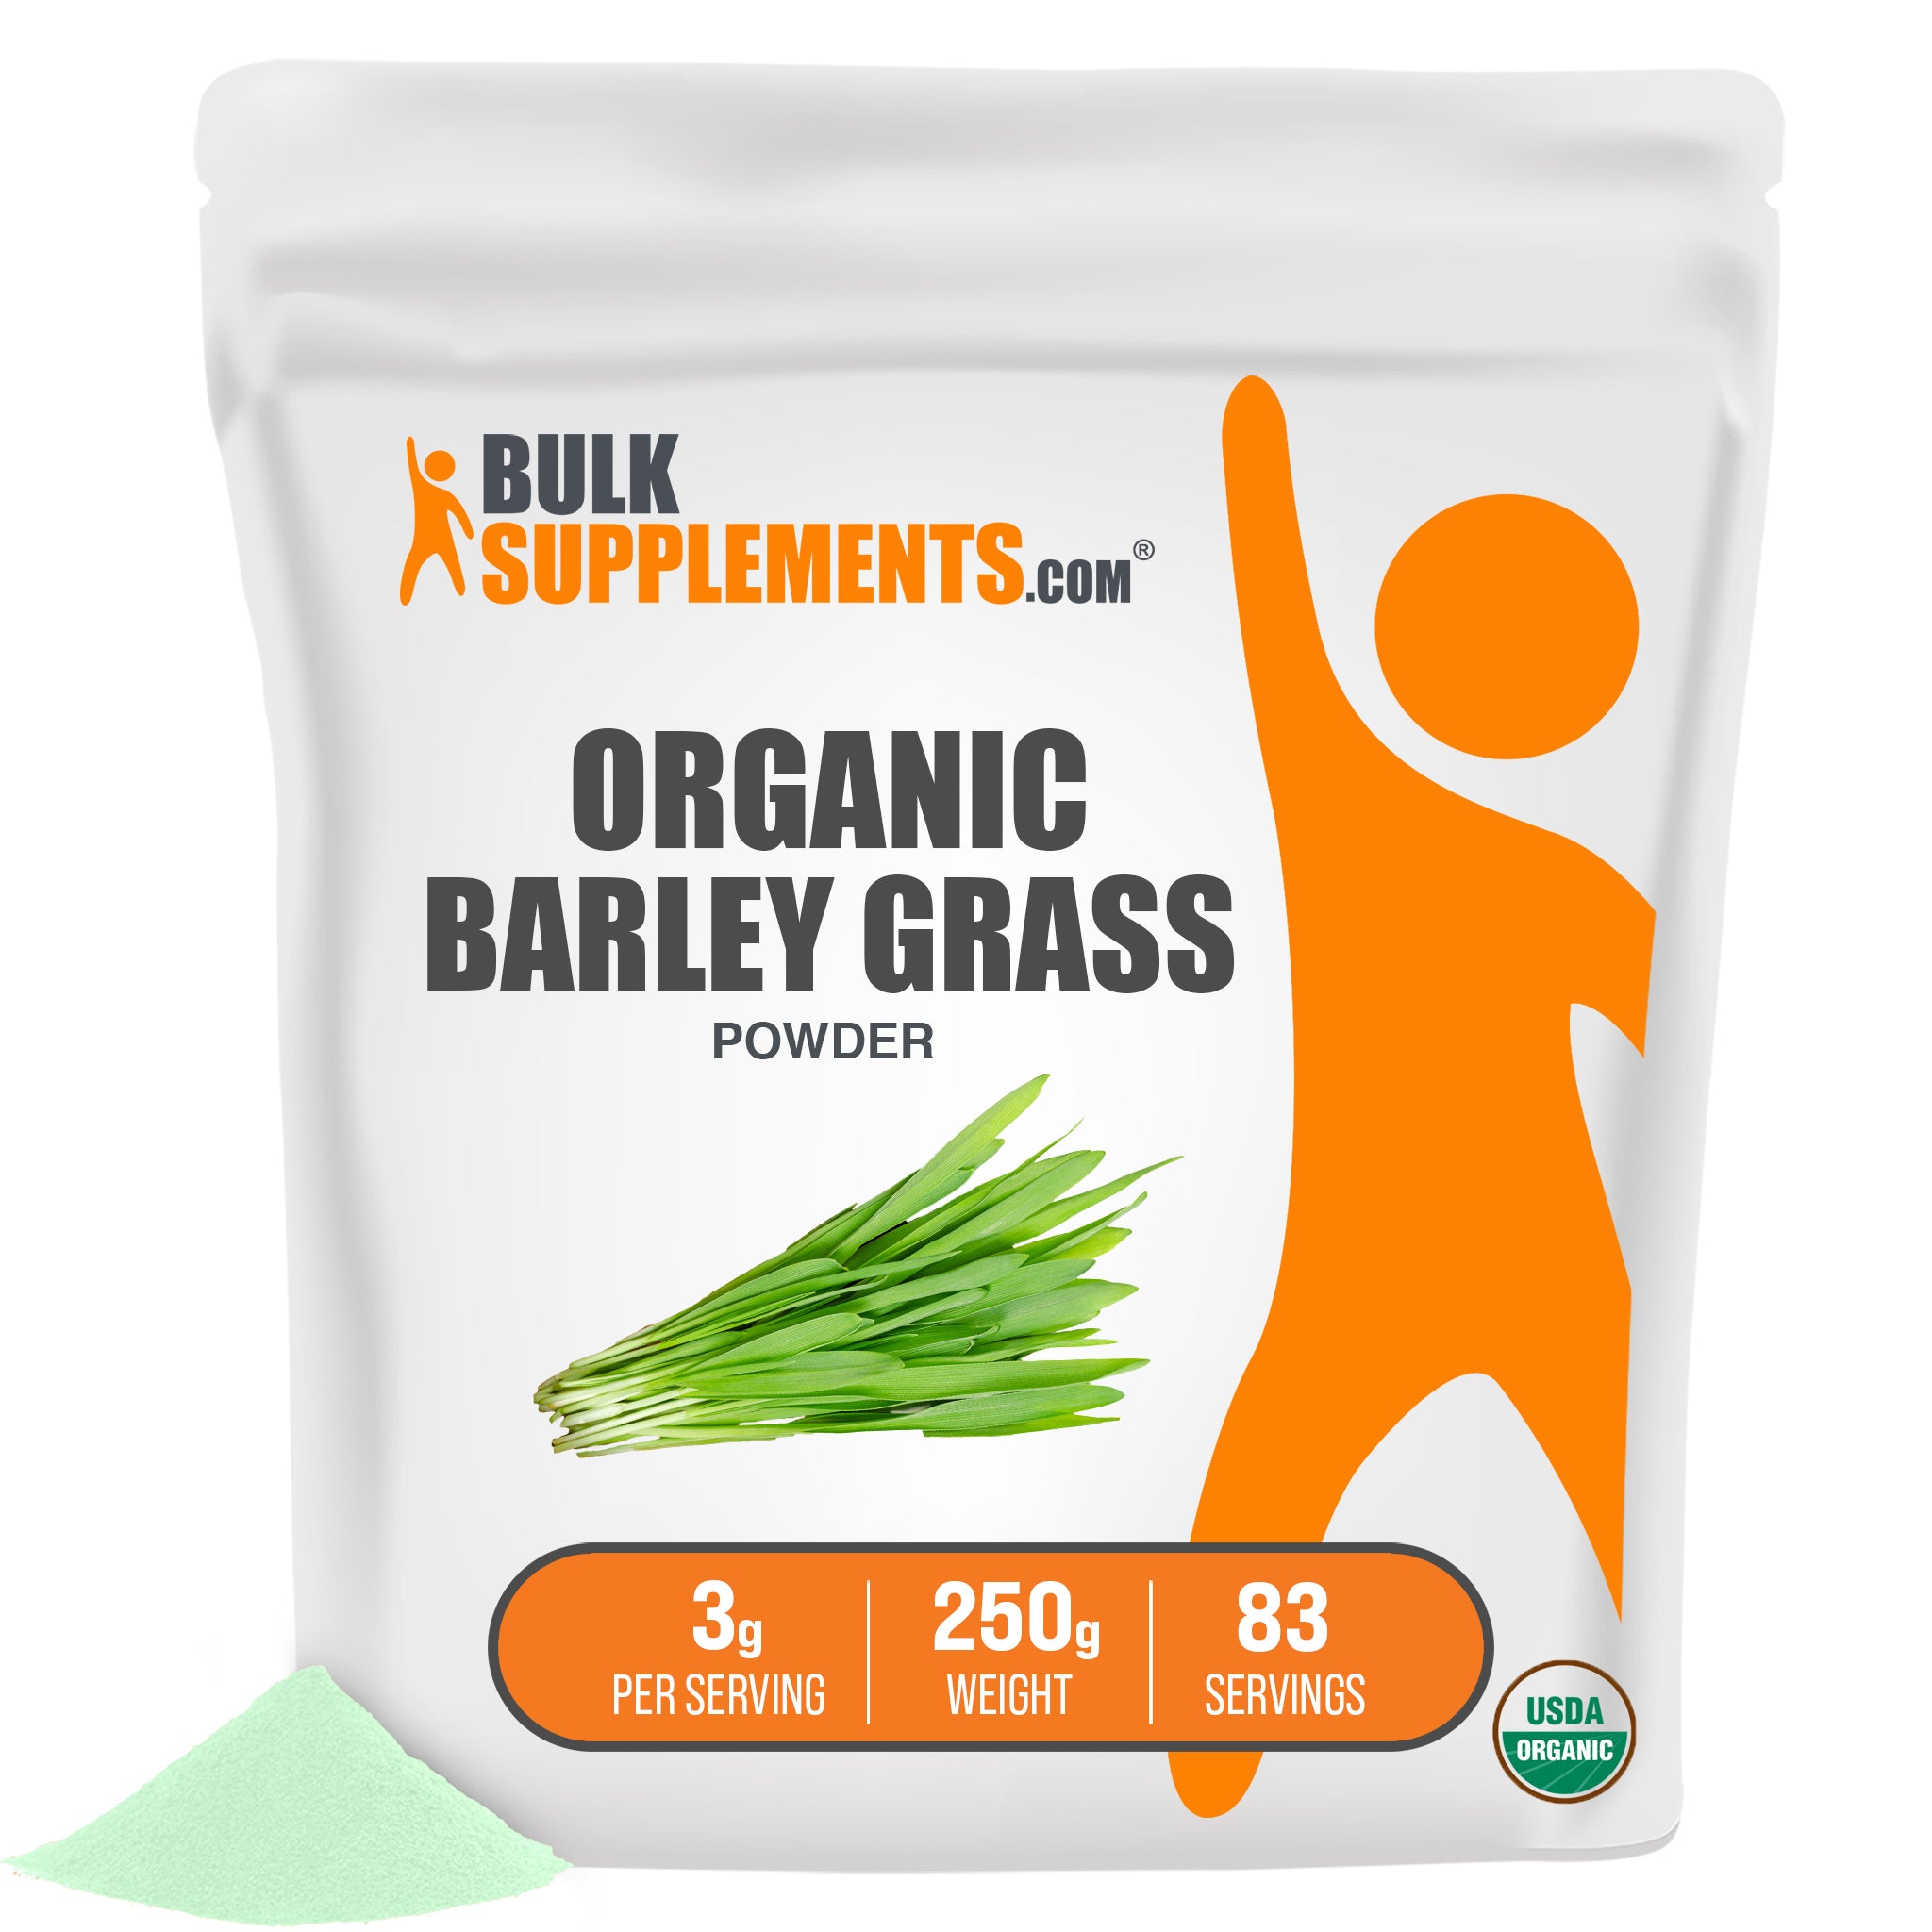 Organic Barley Grass Powder 250g bag with 83 servings at 3g per serving